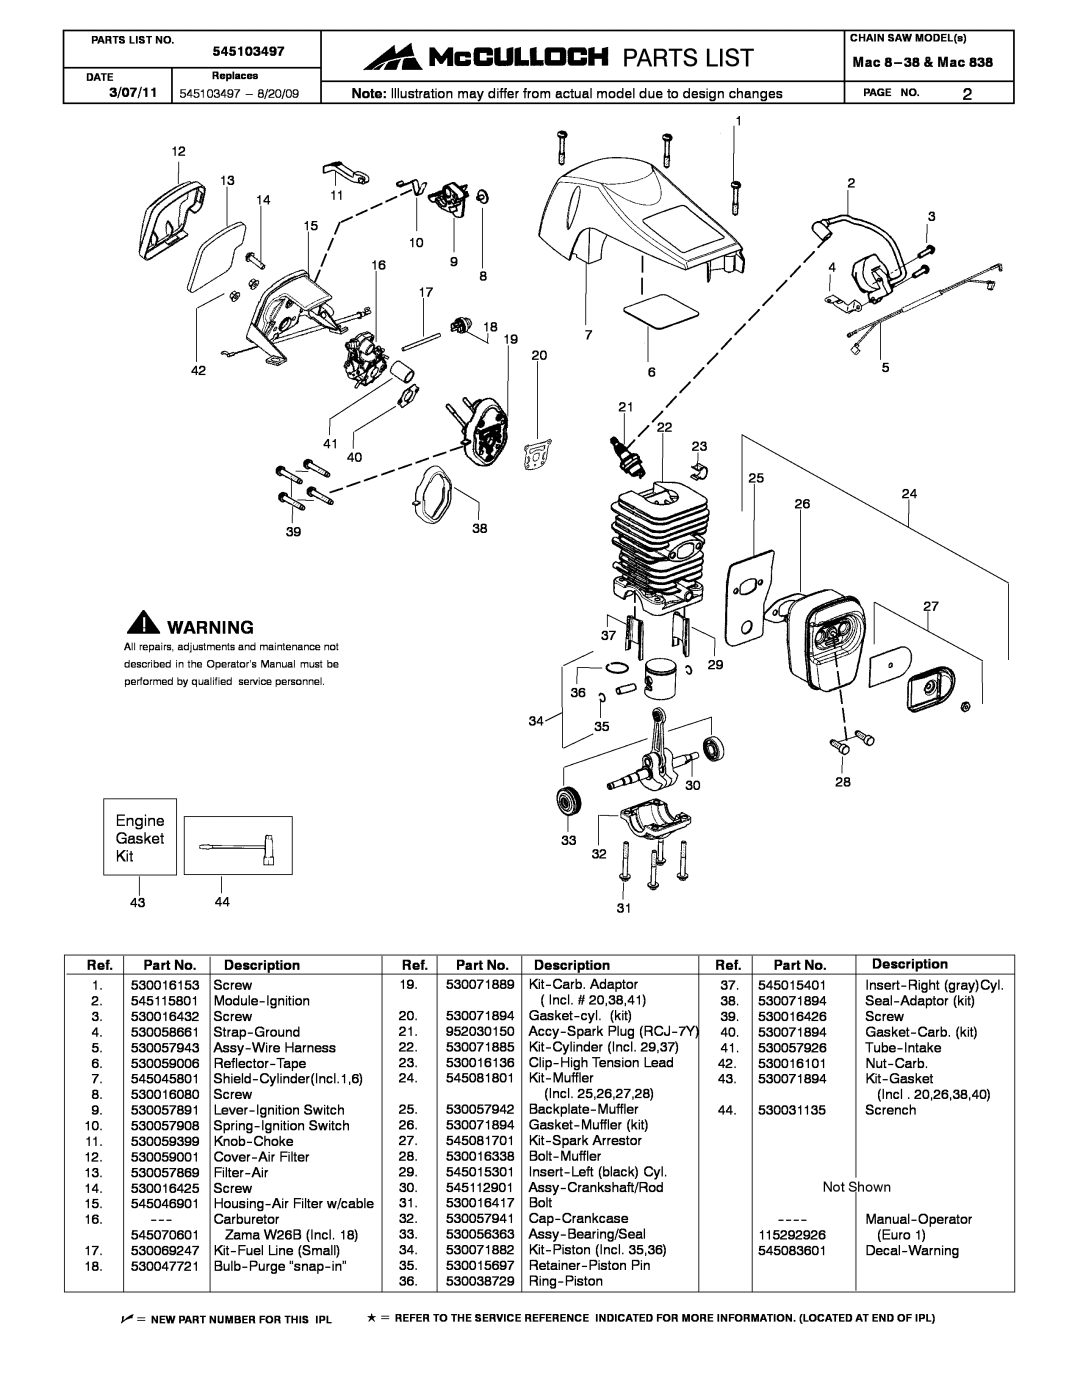 McCulloch 545103497 manual Engine Gasket Kit, 3/07/11, Parts List, Mac 8---38 & Mac, Description 